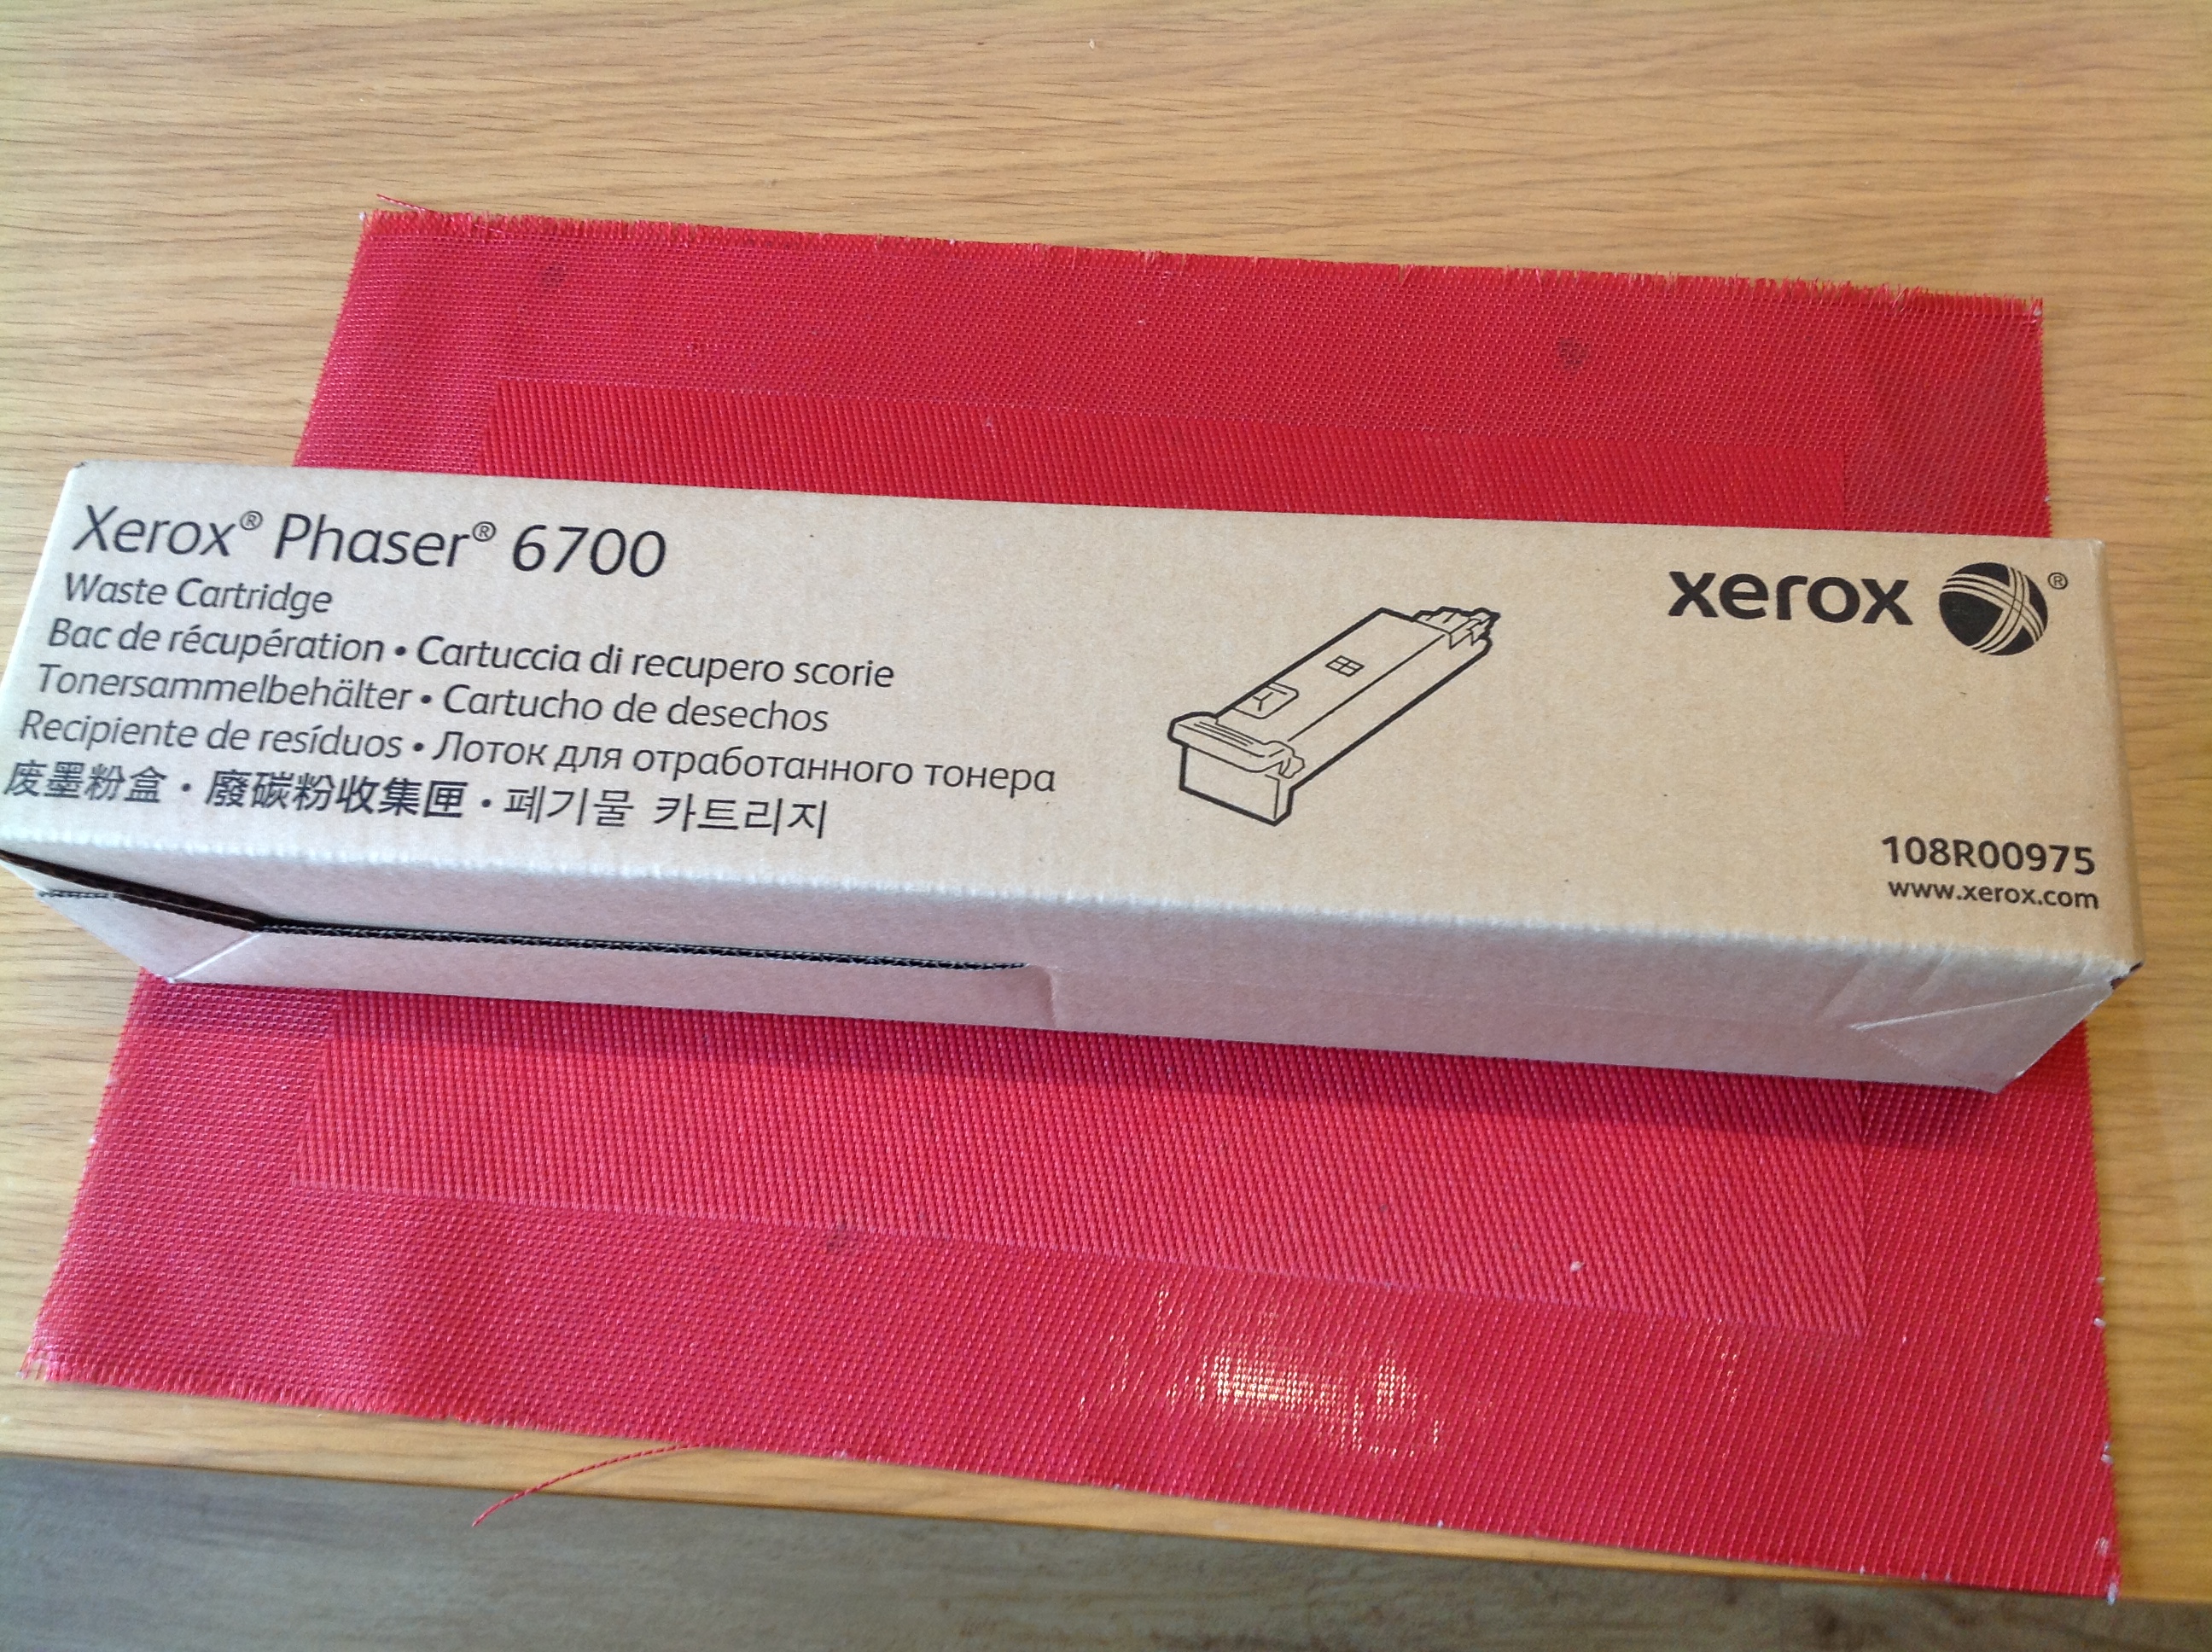 Xerox 108R00975 Phaser 6700, Tonersammelbehälter